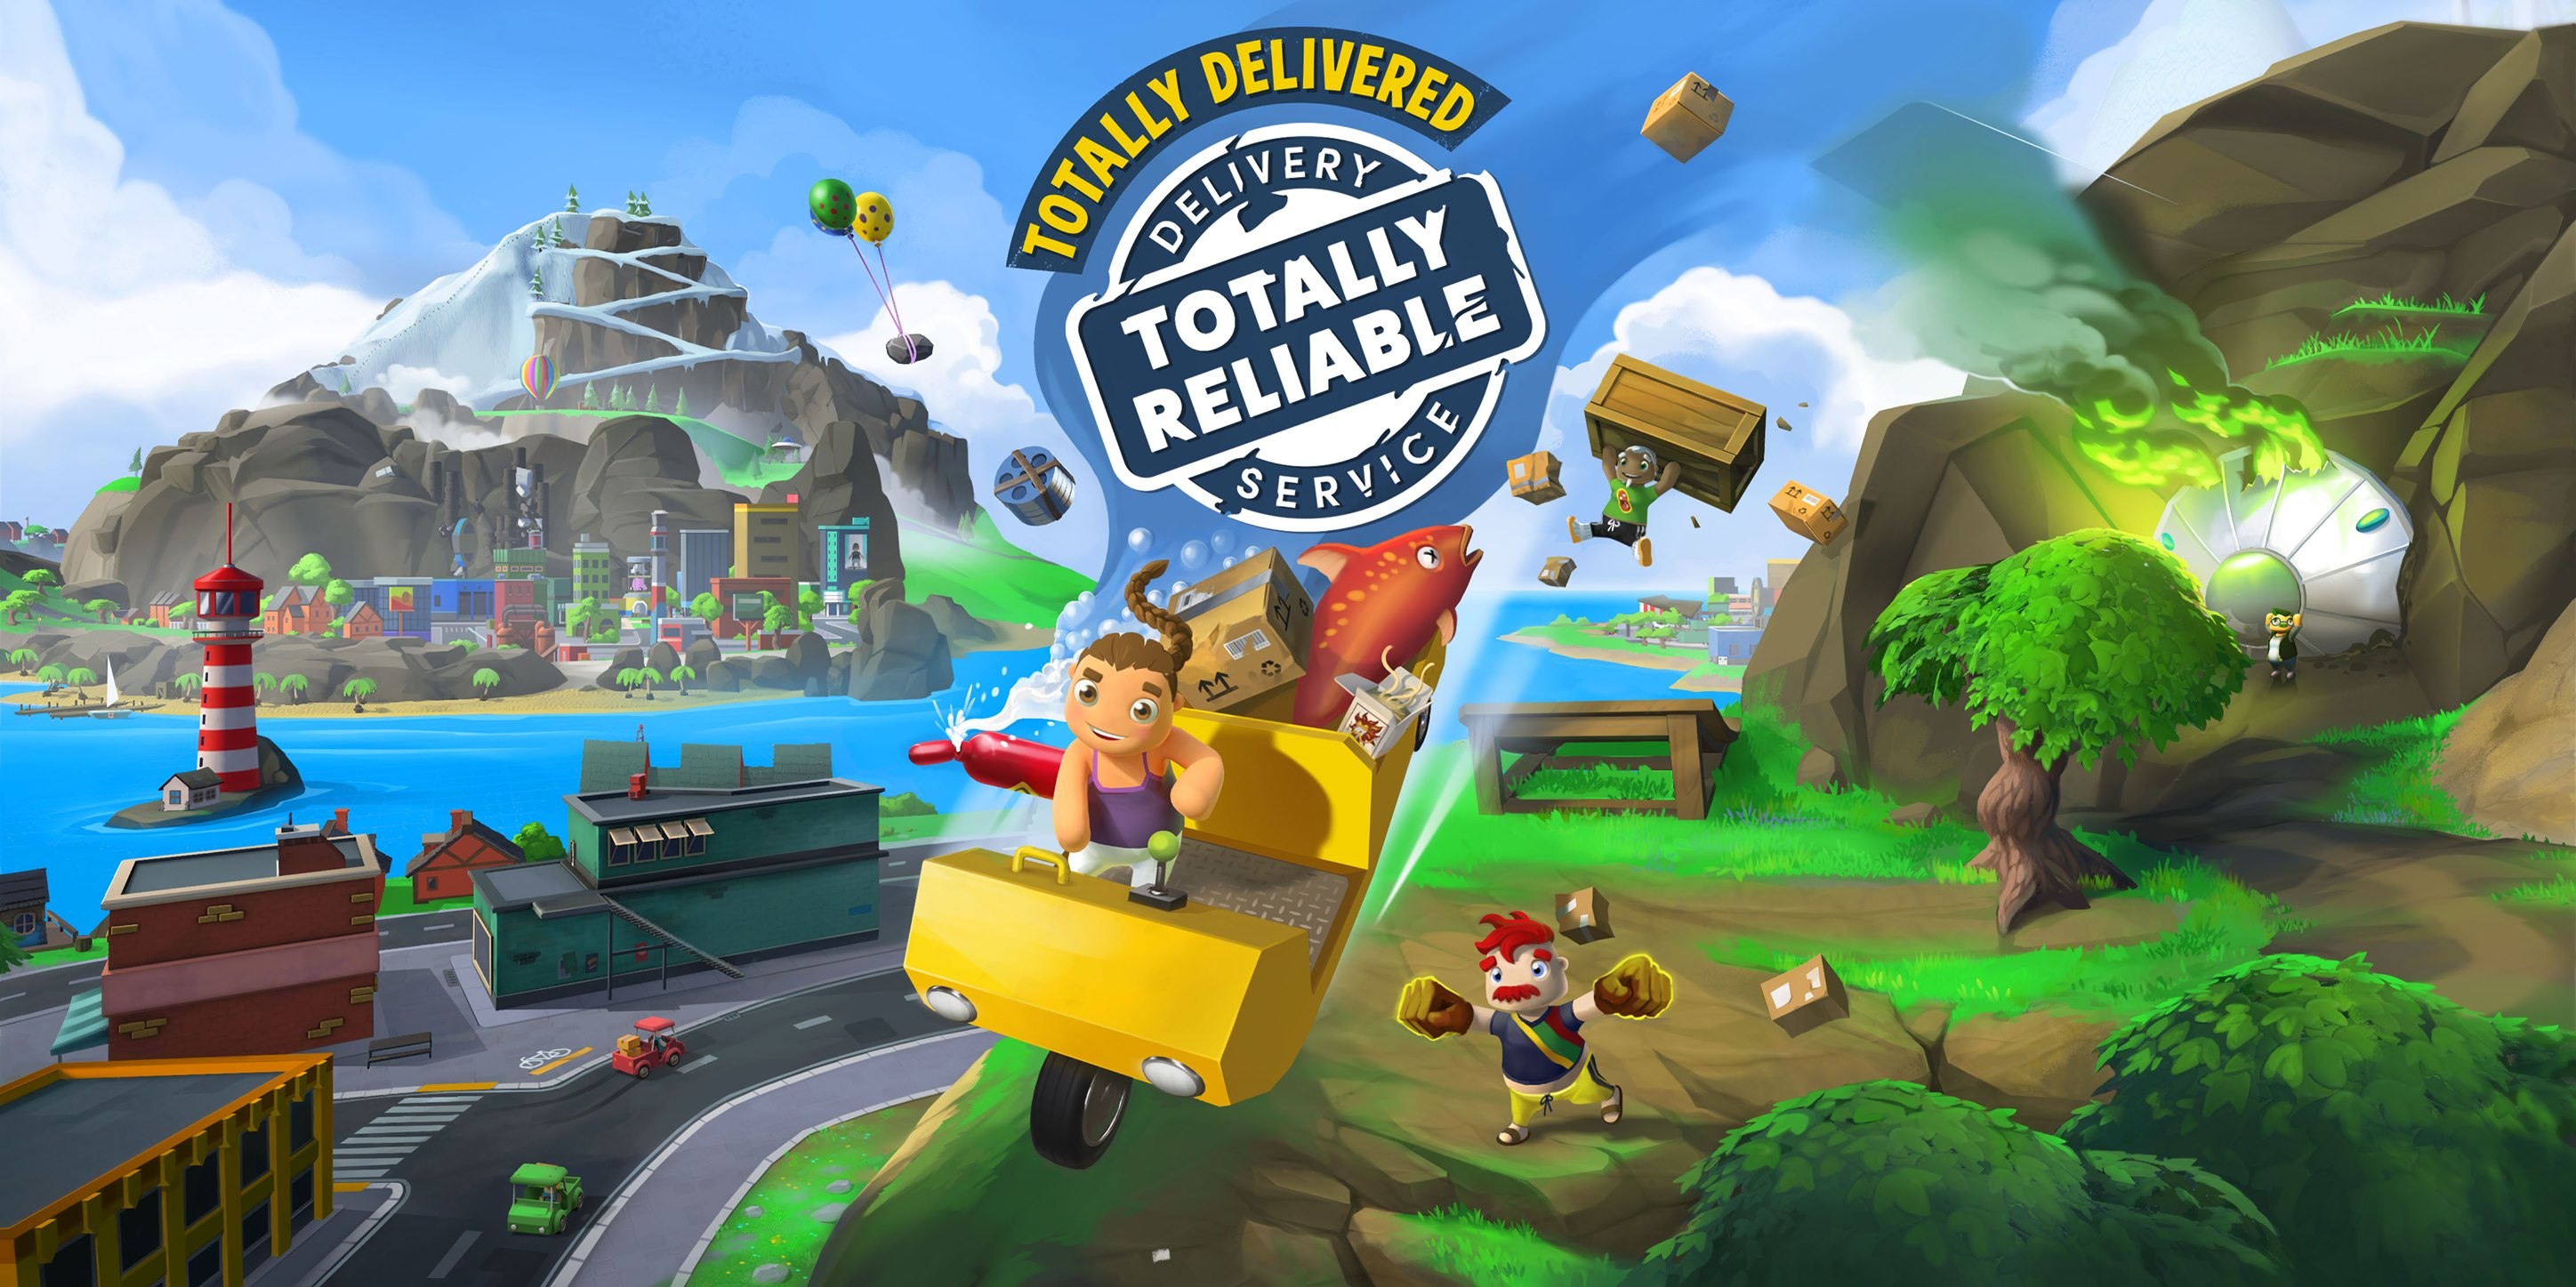 模擬可怕送貨情境遊戲 完全可靠快遞服務 4 月1 日登上steam Totally Reliable Delivery Service 巴哈姆特